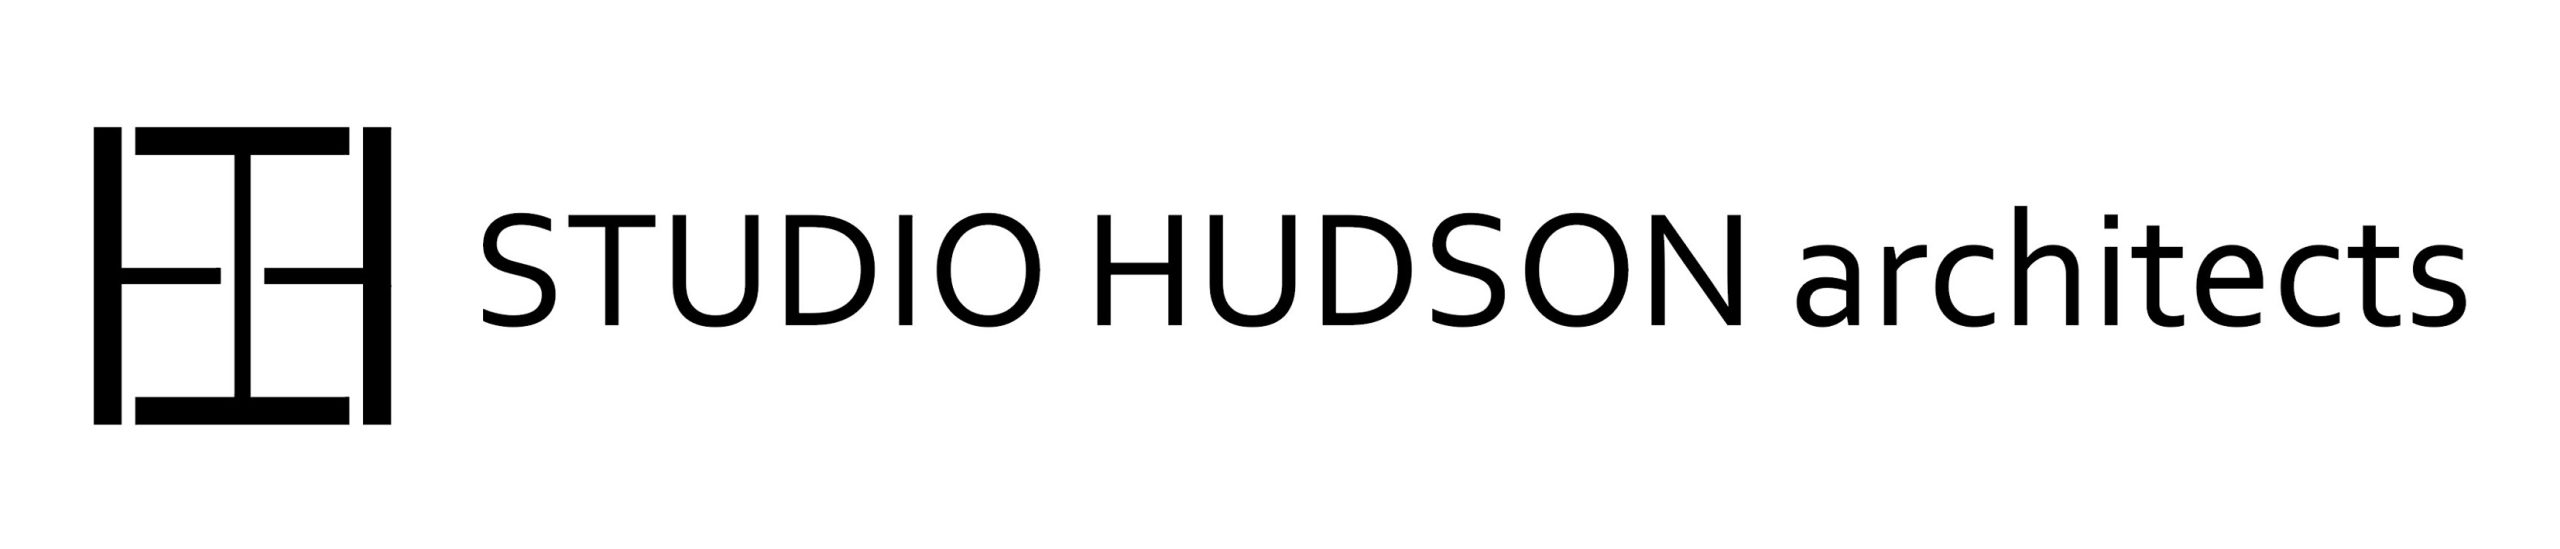 STUDIO HUDSON architects